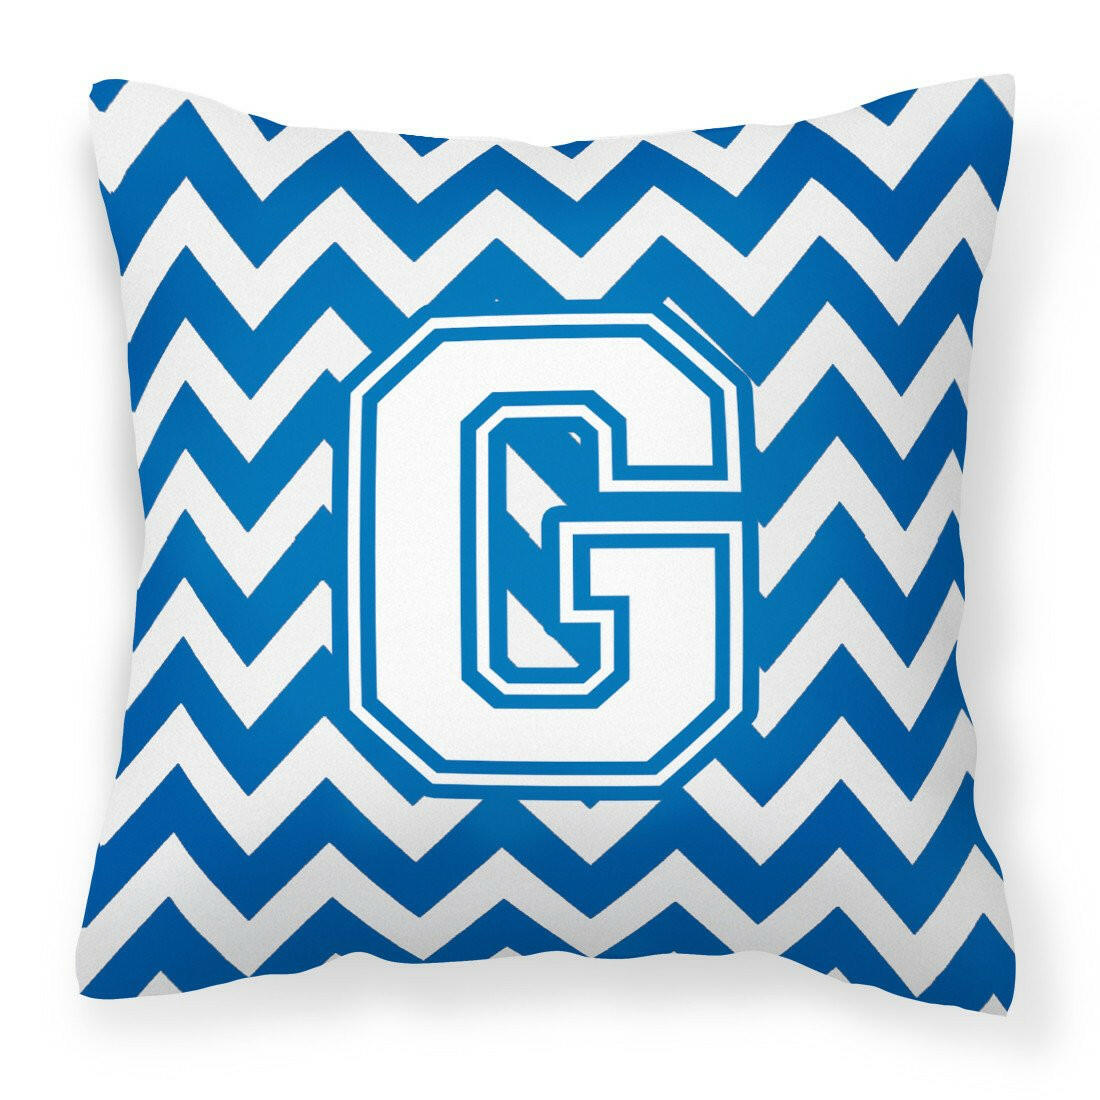 Letter G Chevron Blue and White Fabric Decorative Pillow CJ1045-GPW1414 by Caroline's Treasures